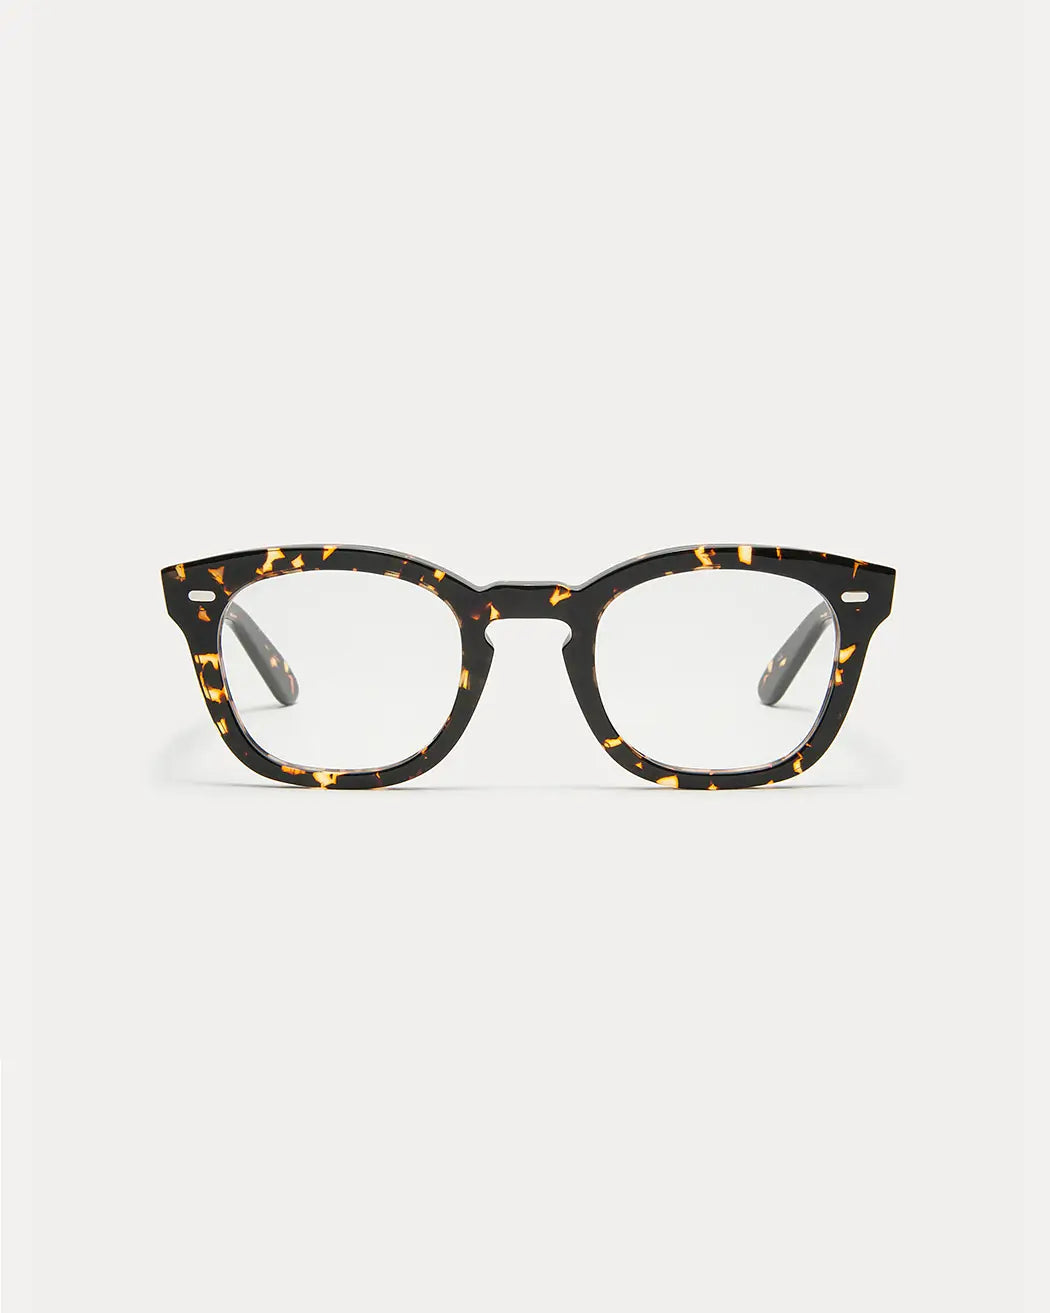 Tortoise eyeglasses with the best prescription lenses from The Optical. Co